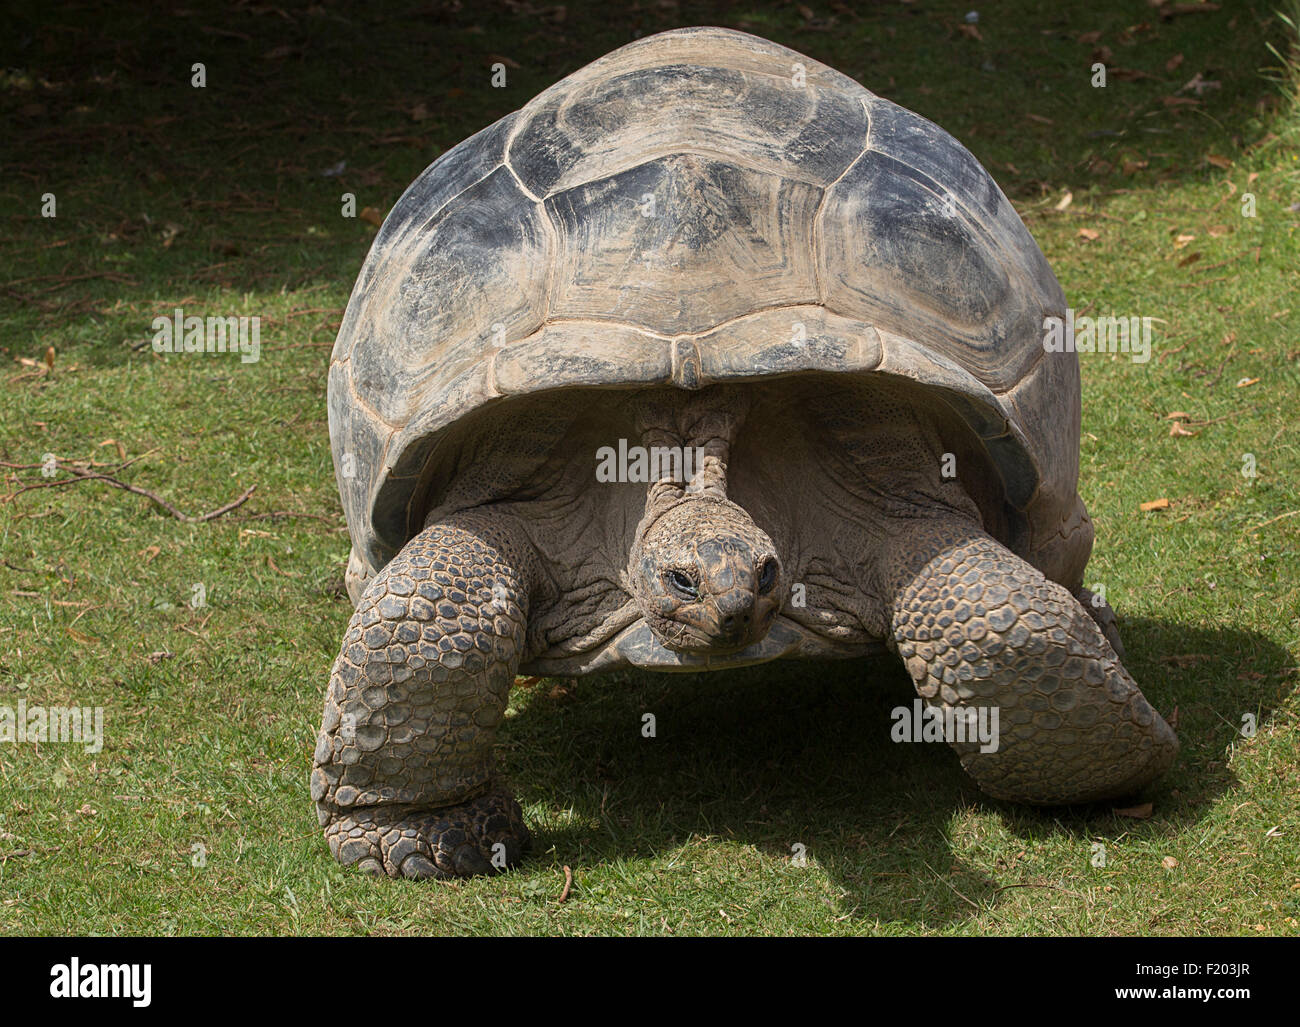 Giant tortoise at Cotswold Wildlife Park, Burford, Oxfordshirw, England Stock Photo